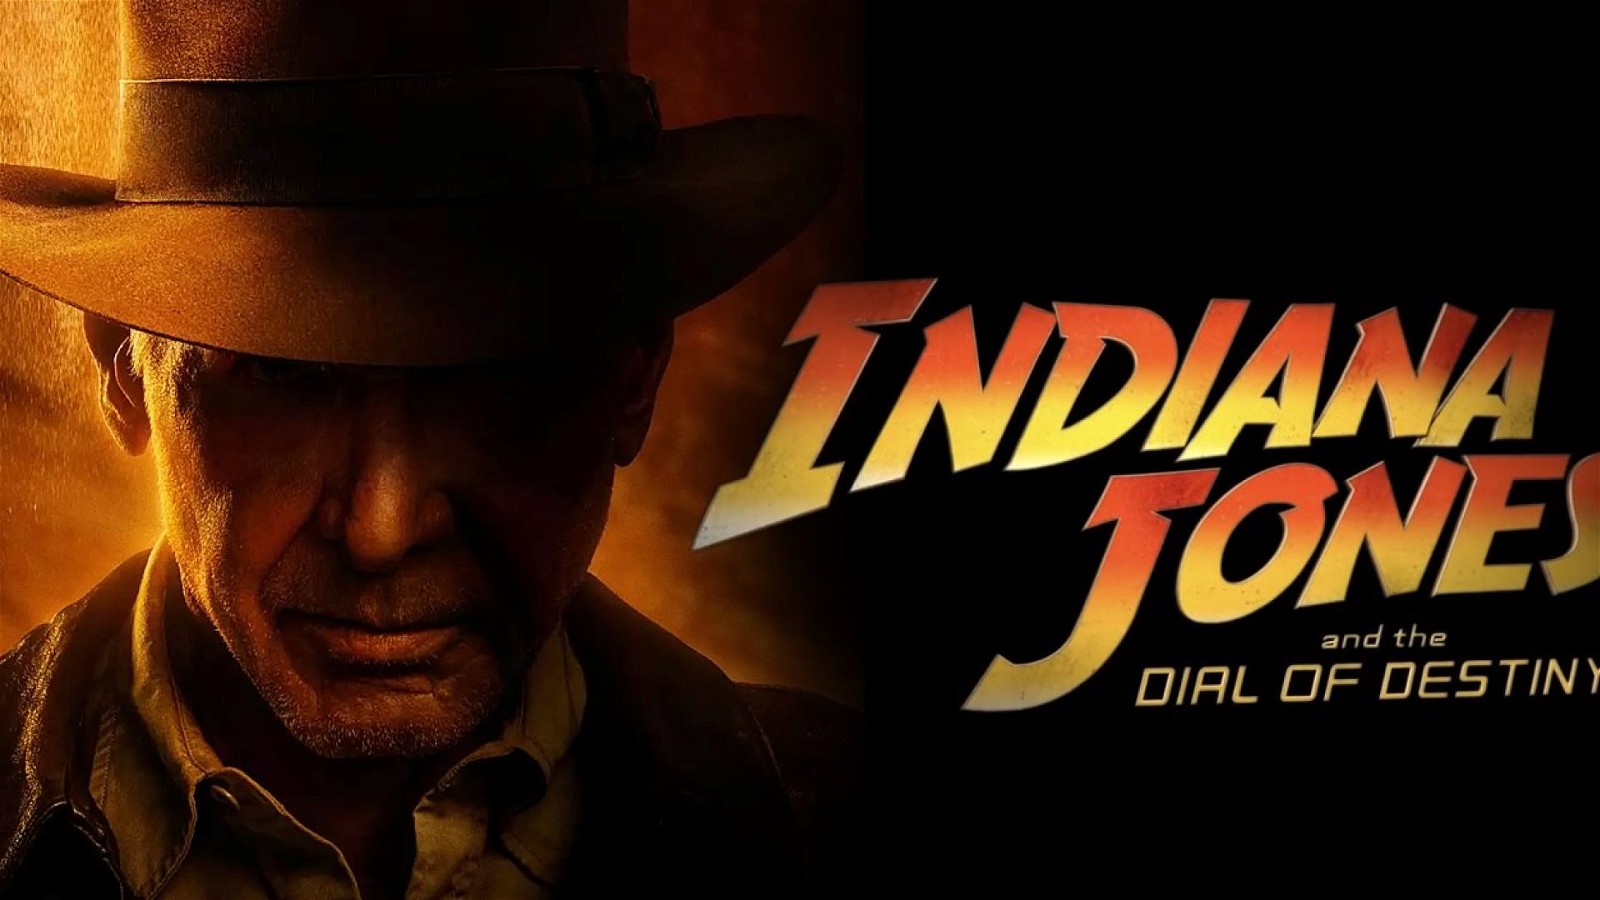  Indiana Jones 5